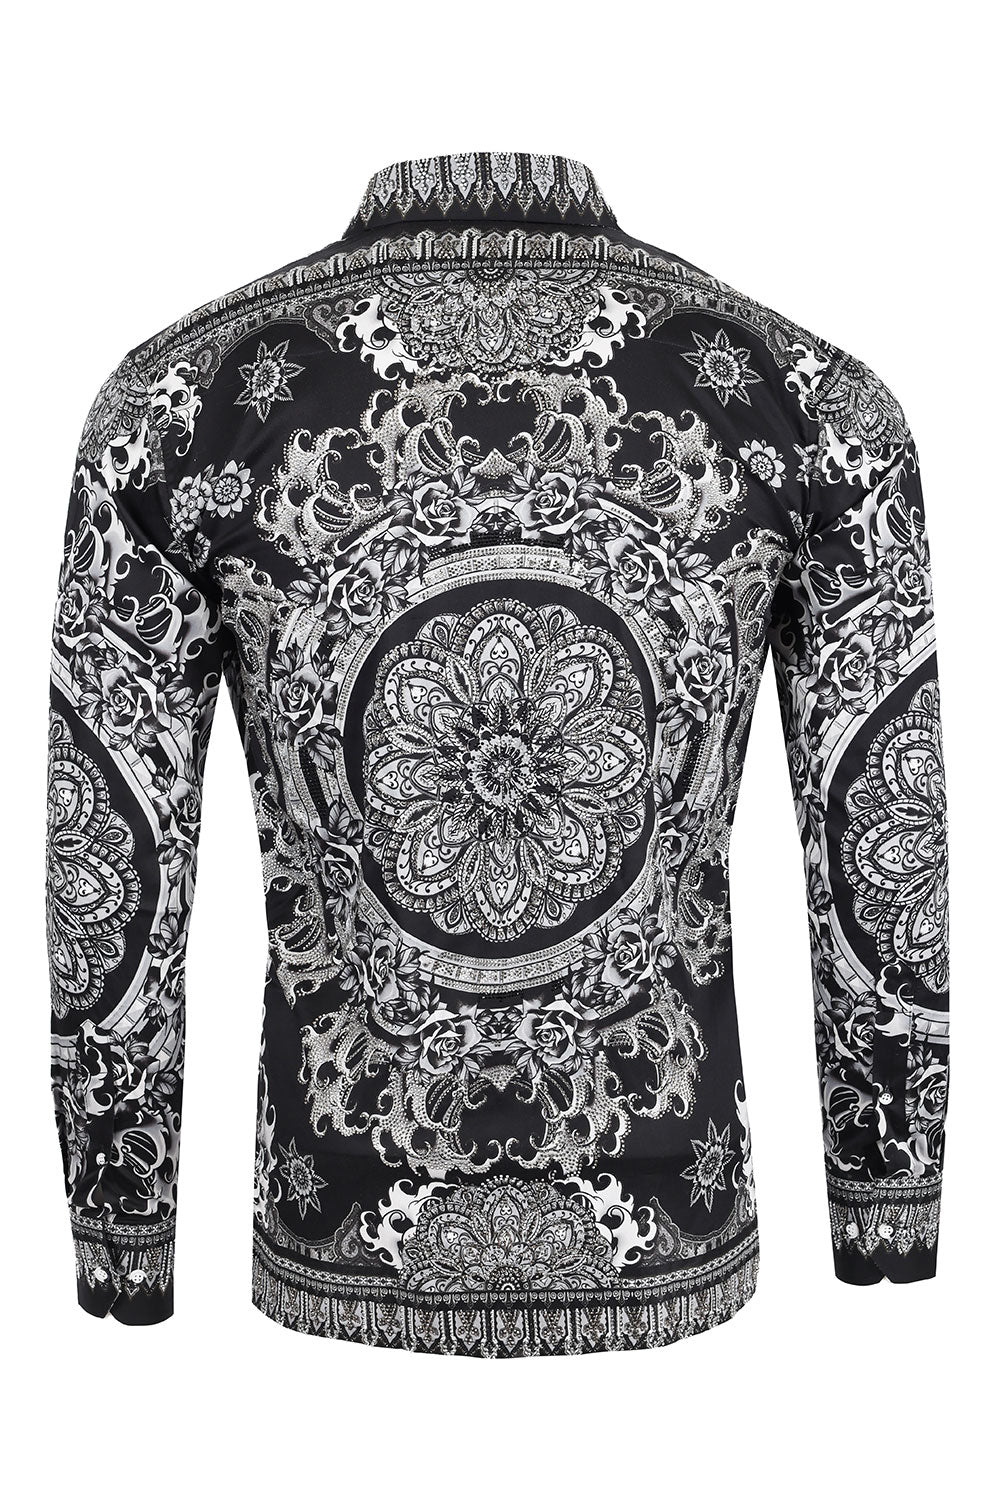 BARABAS Men's Rhinestone Floral Print Baroque Long Sleeve Shirts 3SPR413 Black